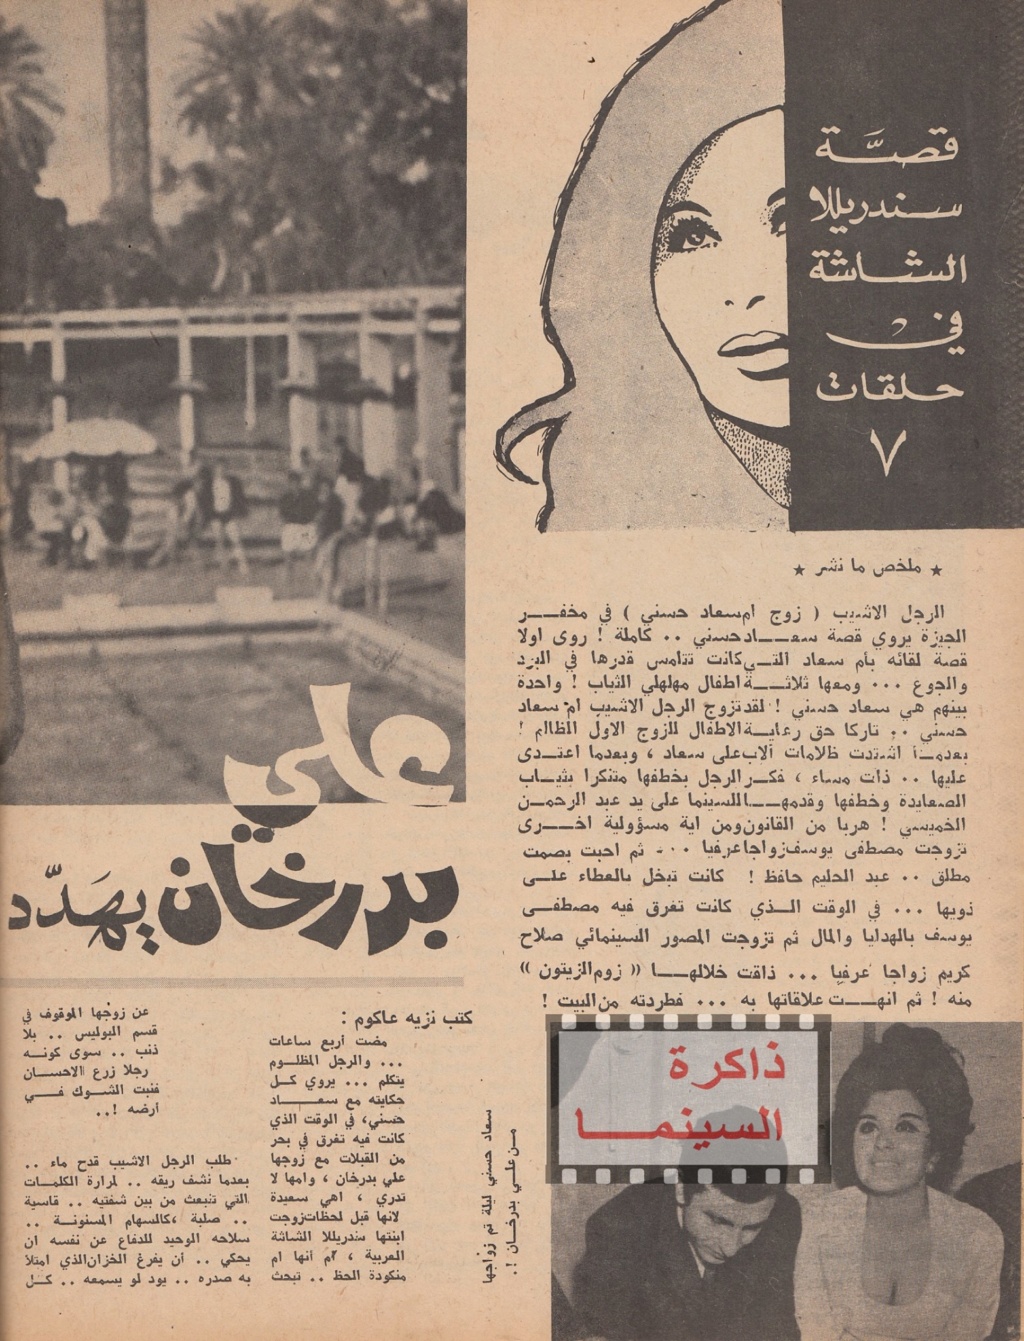 بدرخان - مقال صحفي : علي بدرخان يهدد بالانتحار من أجل سعاد حسني ! 1970 م 1152